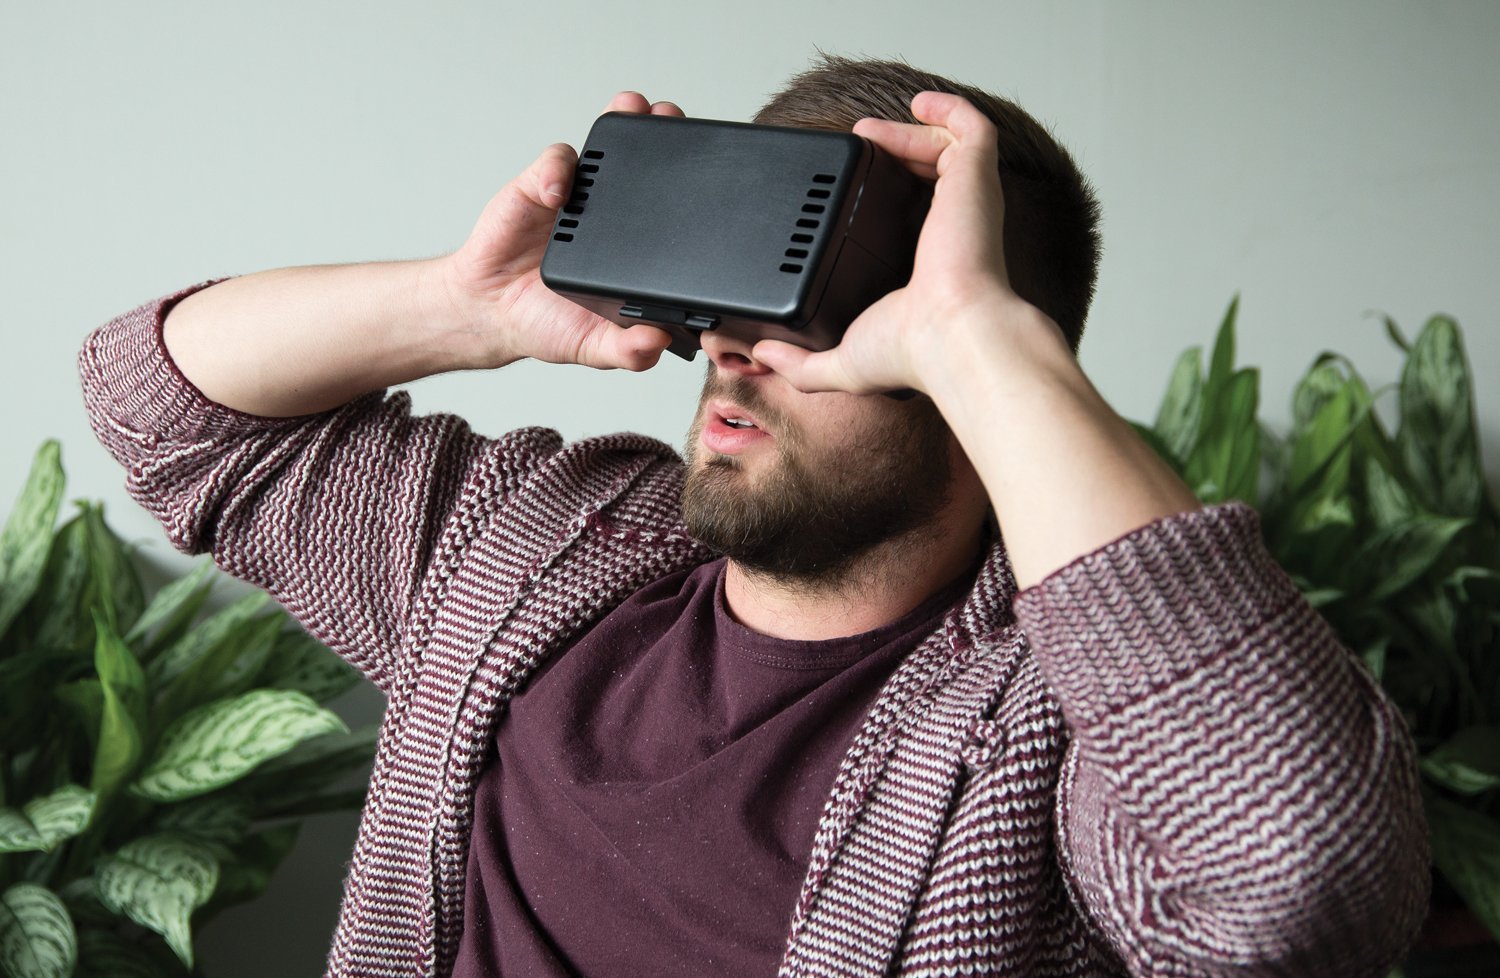   Virtual reality